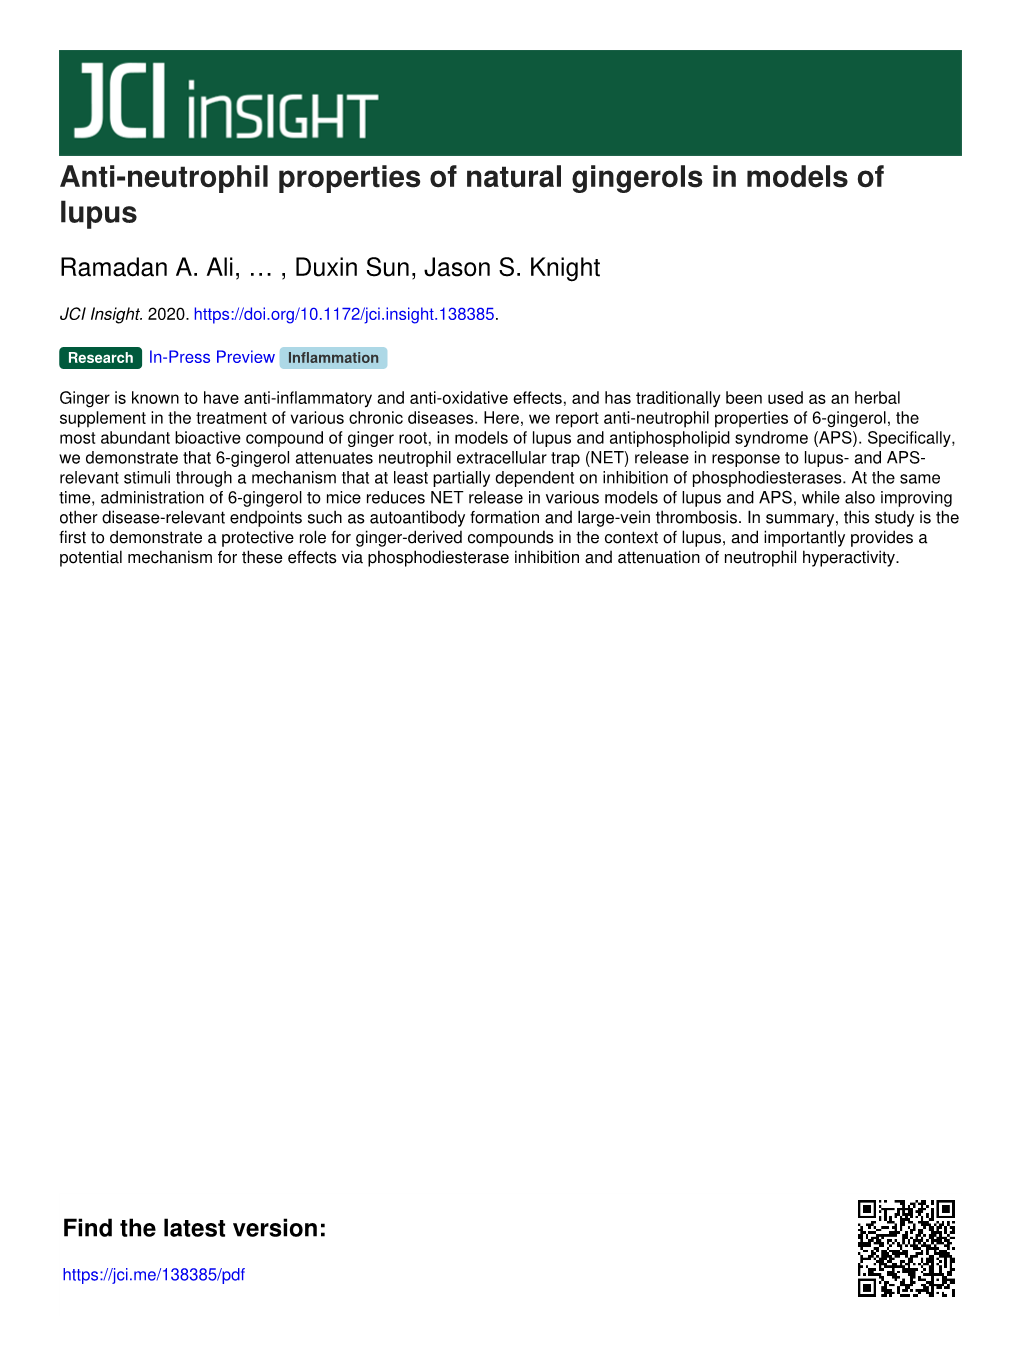 Anti-Neutrophil Properties of Natural Gingerols in Models of Lupus